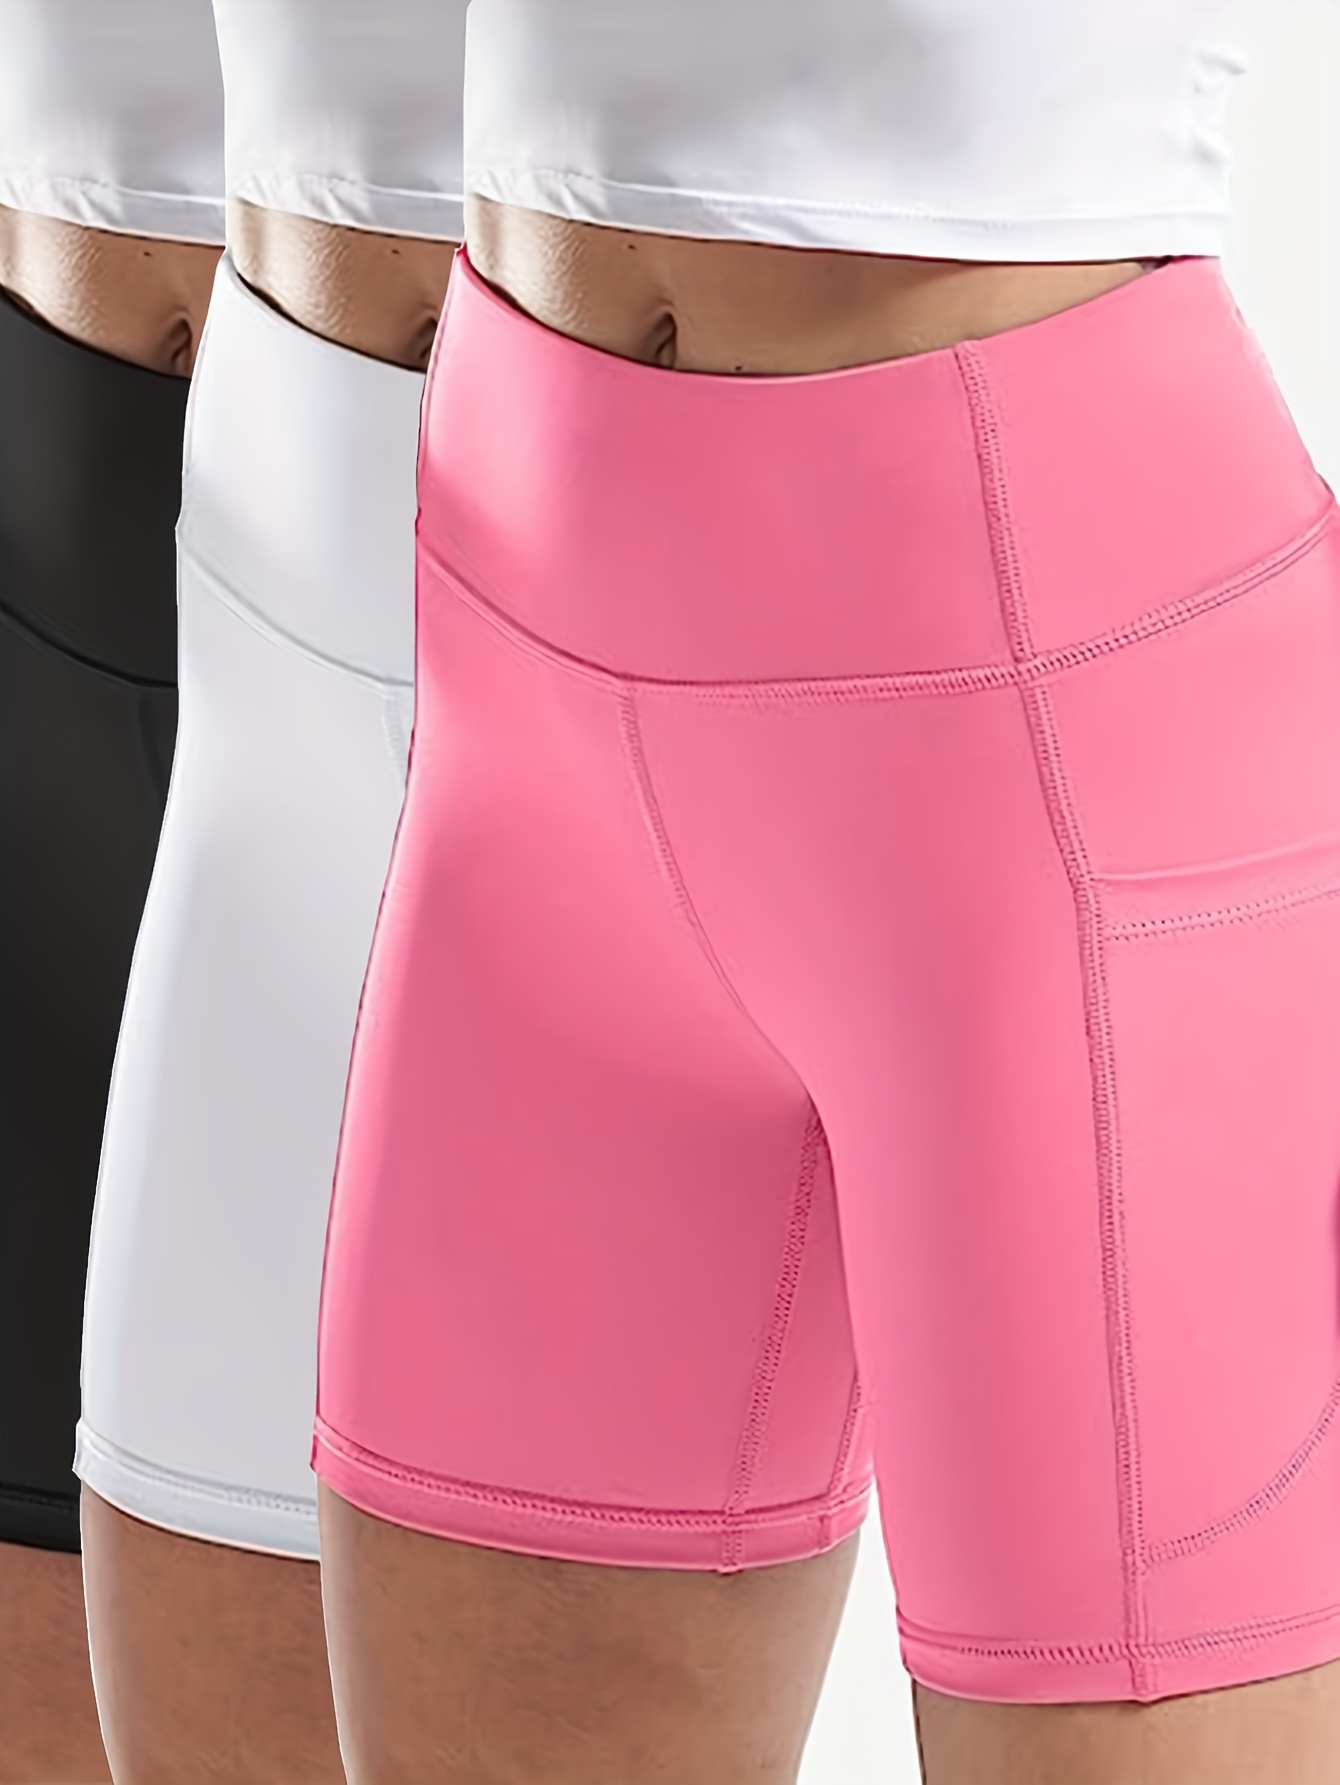 Workout Shorts for Women 3 Scrunch Short Summer Tummy Control Gym Yoga  High Waist Running Sport Active Exercise Fitness Shorts 